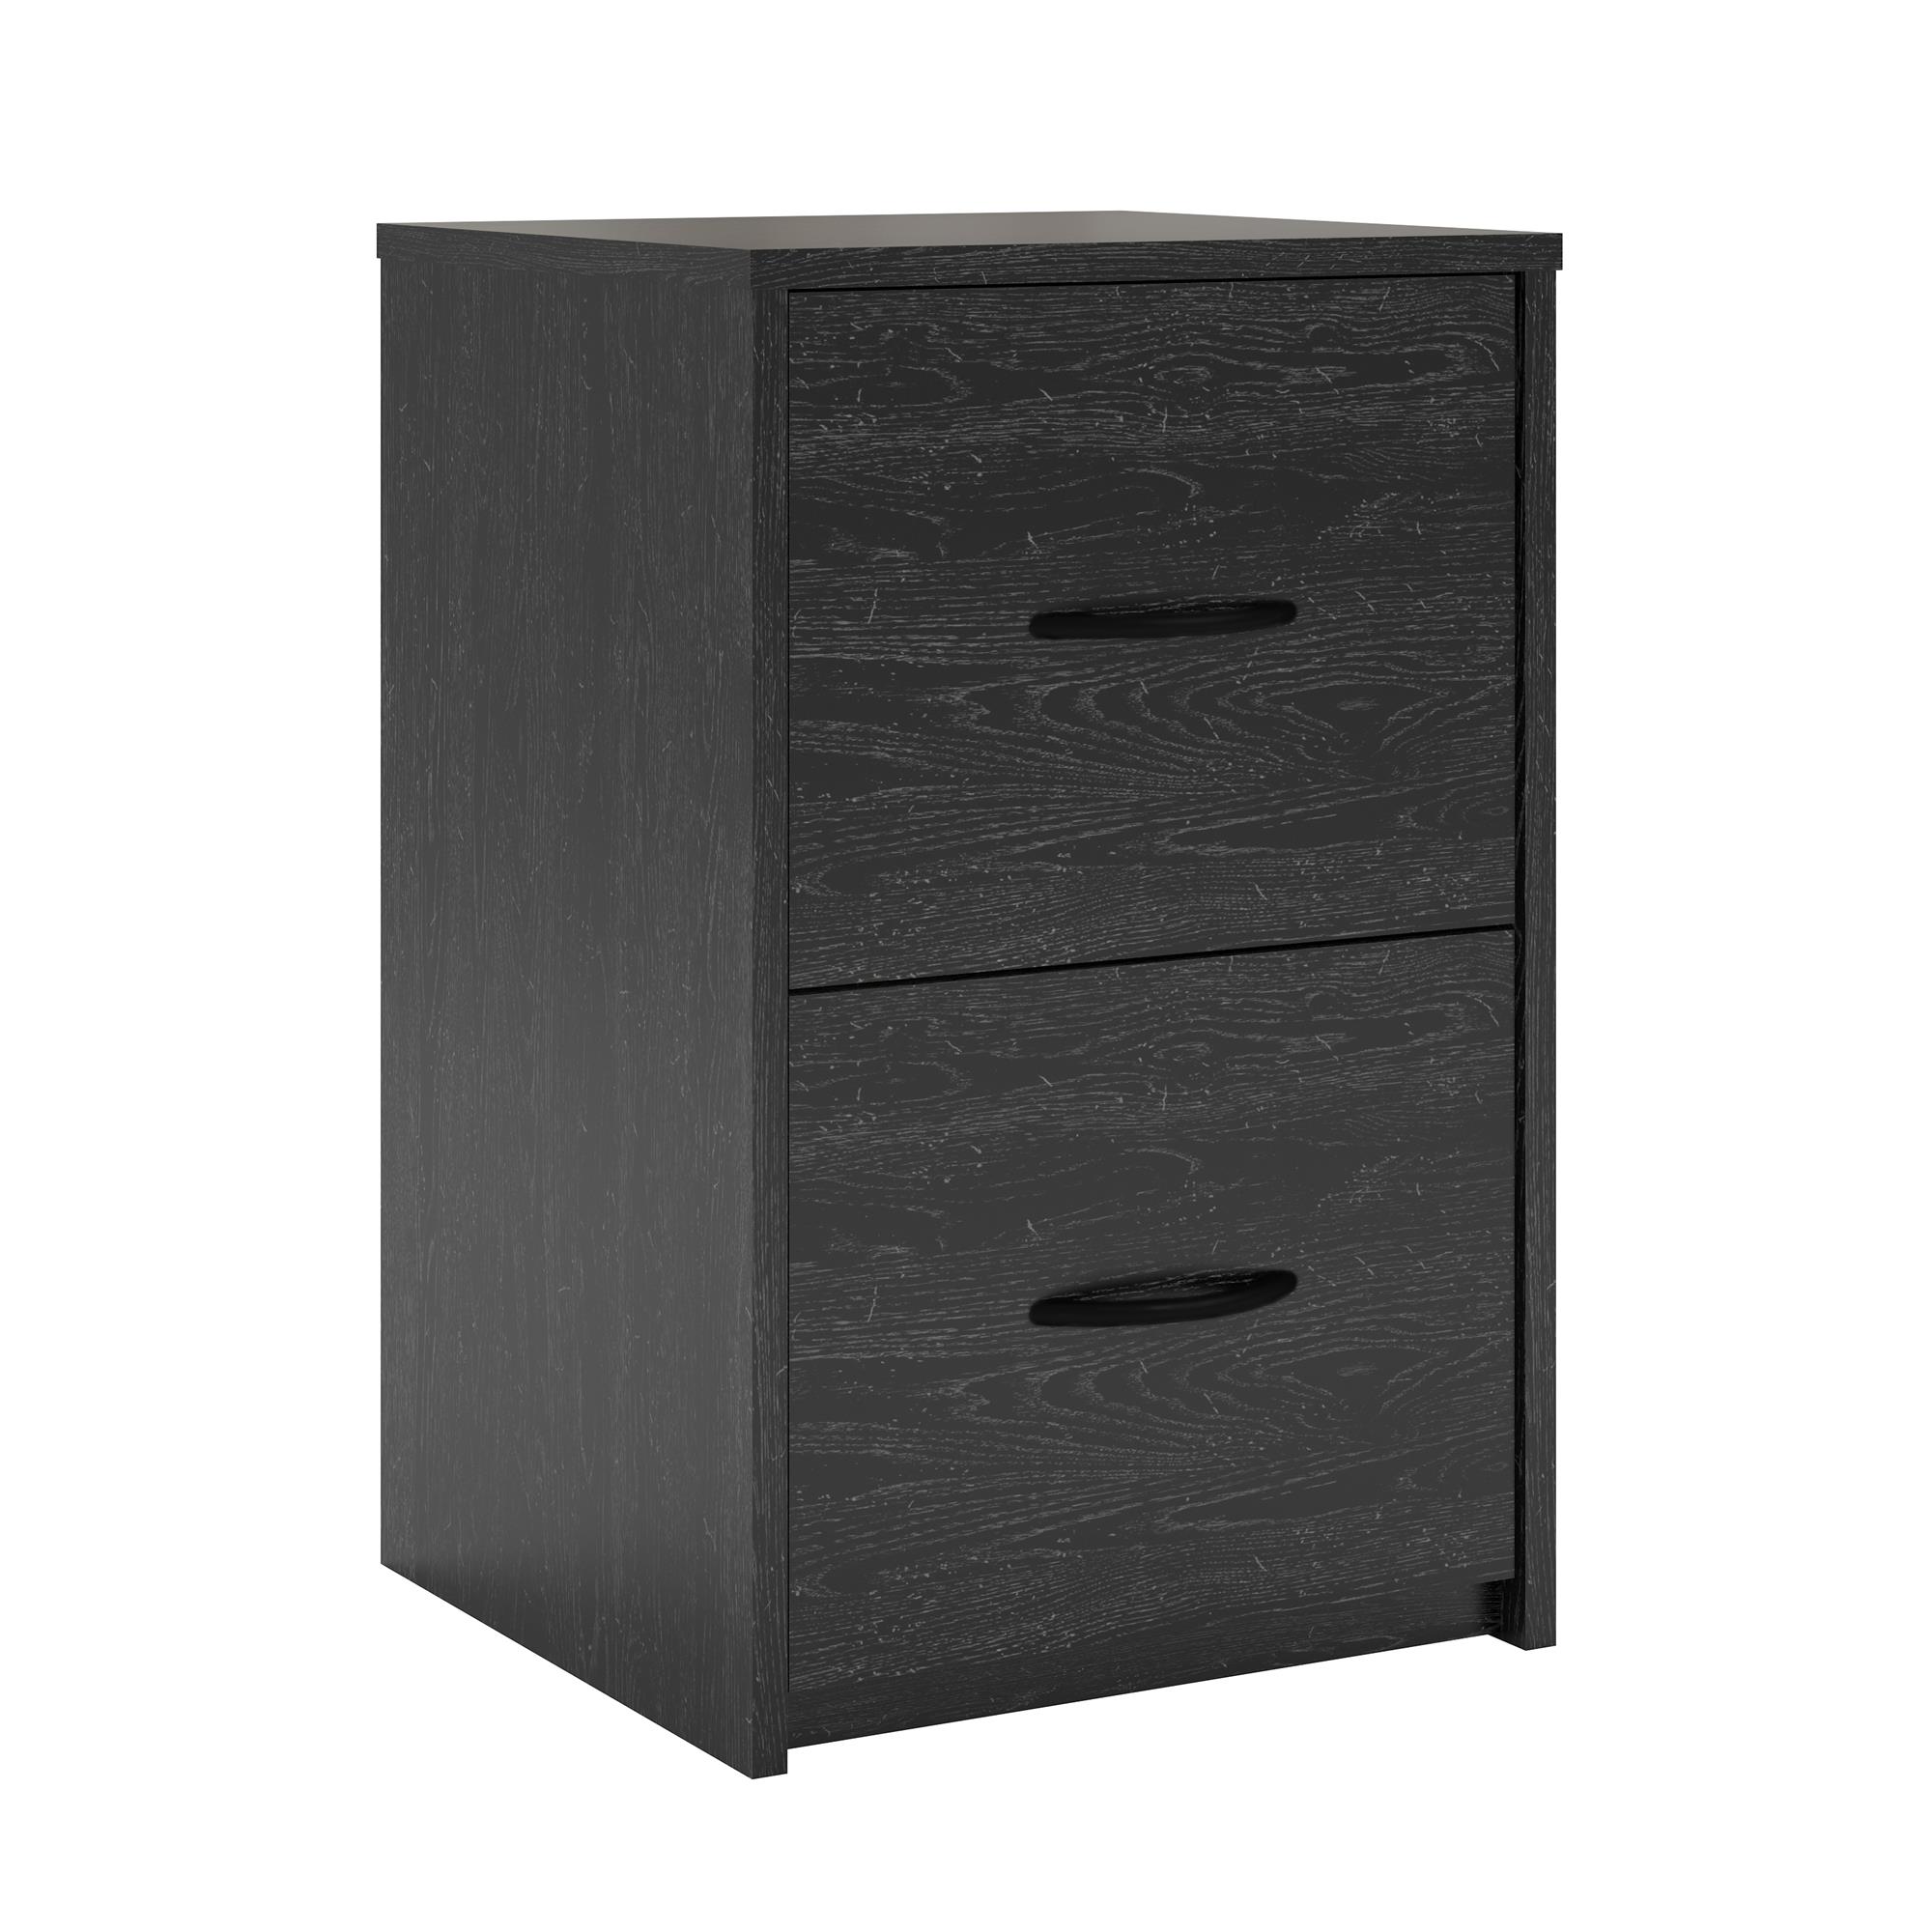 Ameriwood Home Core 2 Drawer File Cabinet, Black Oak - image 2 of 6